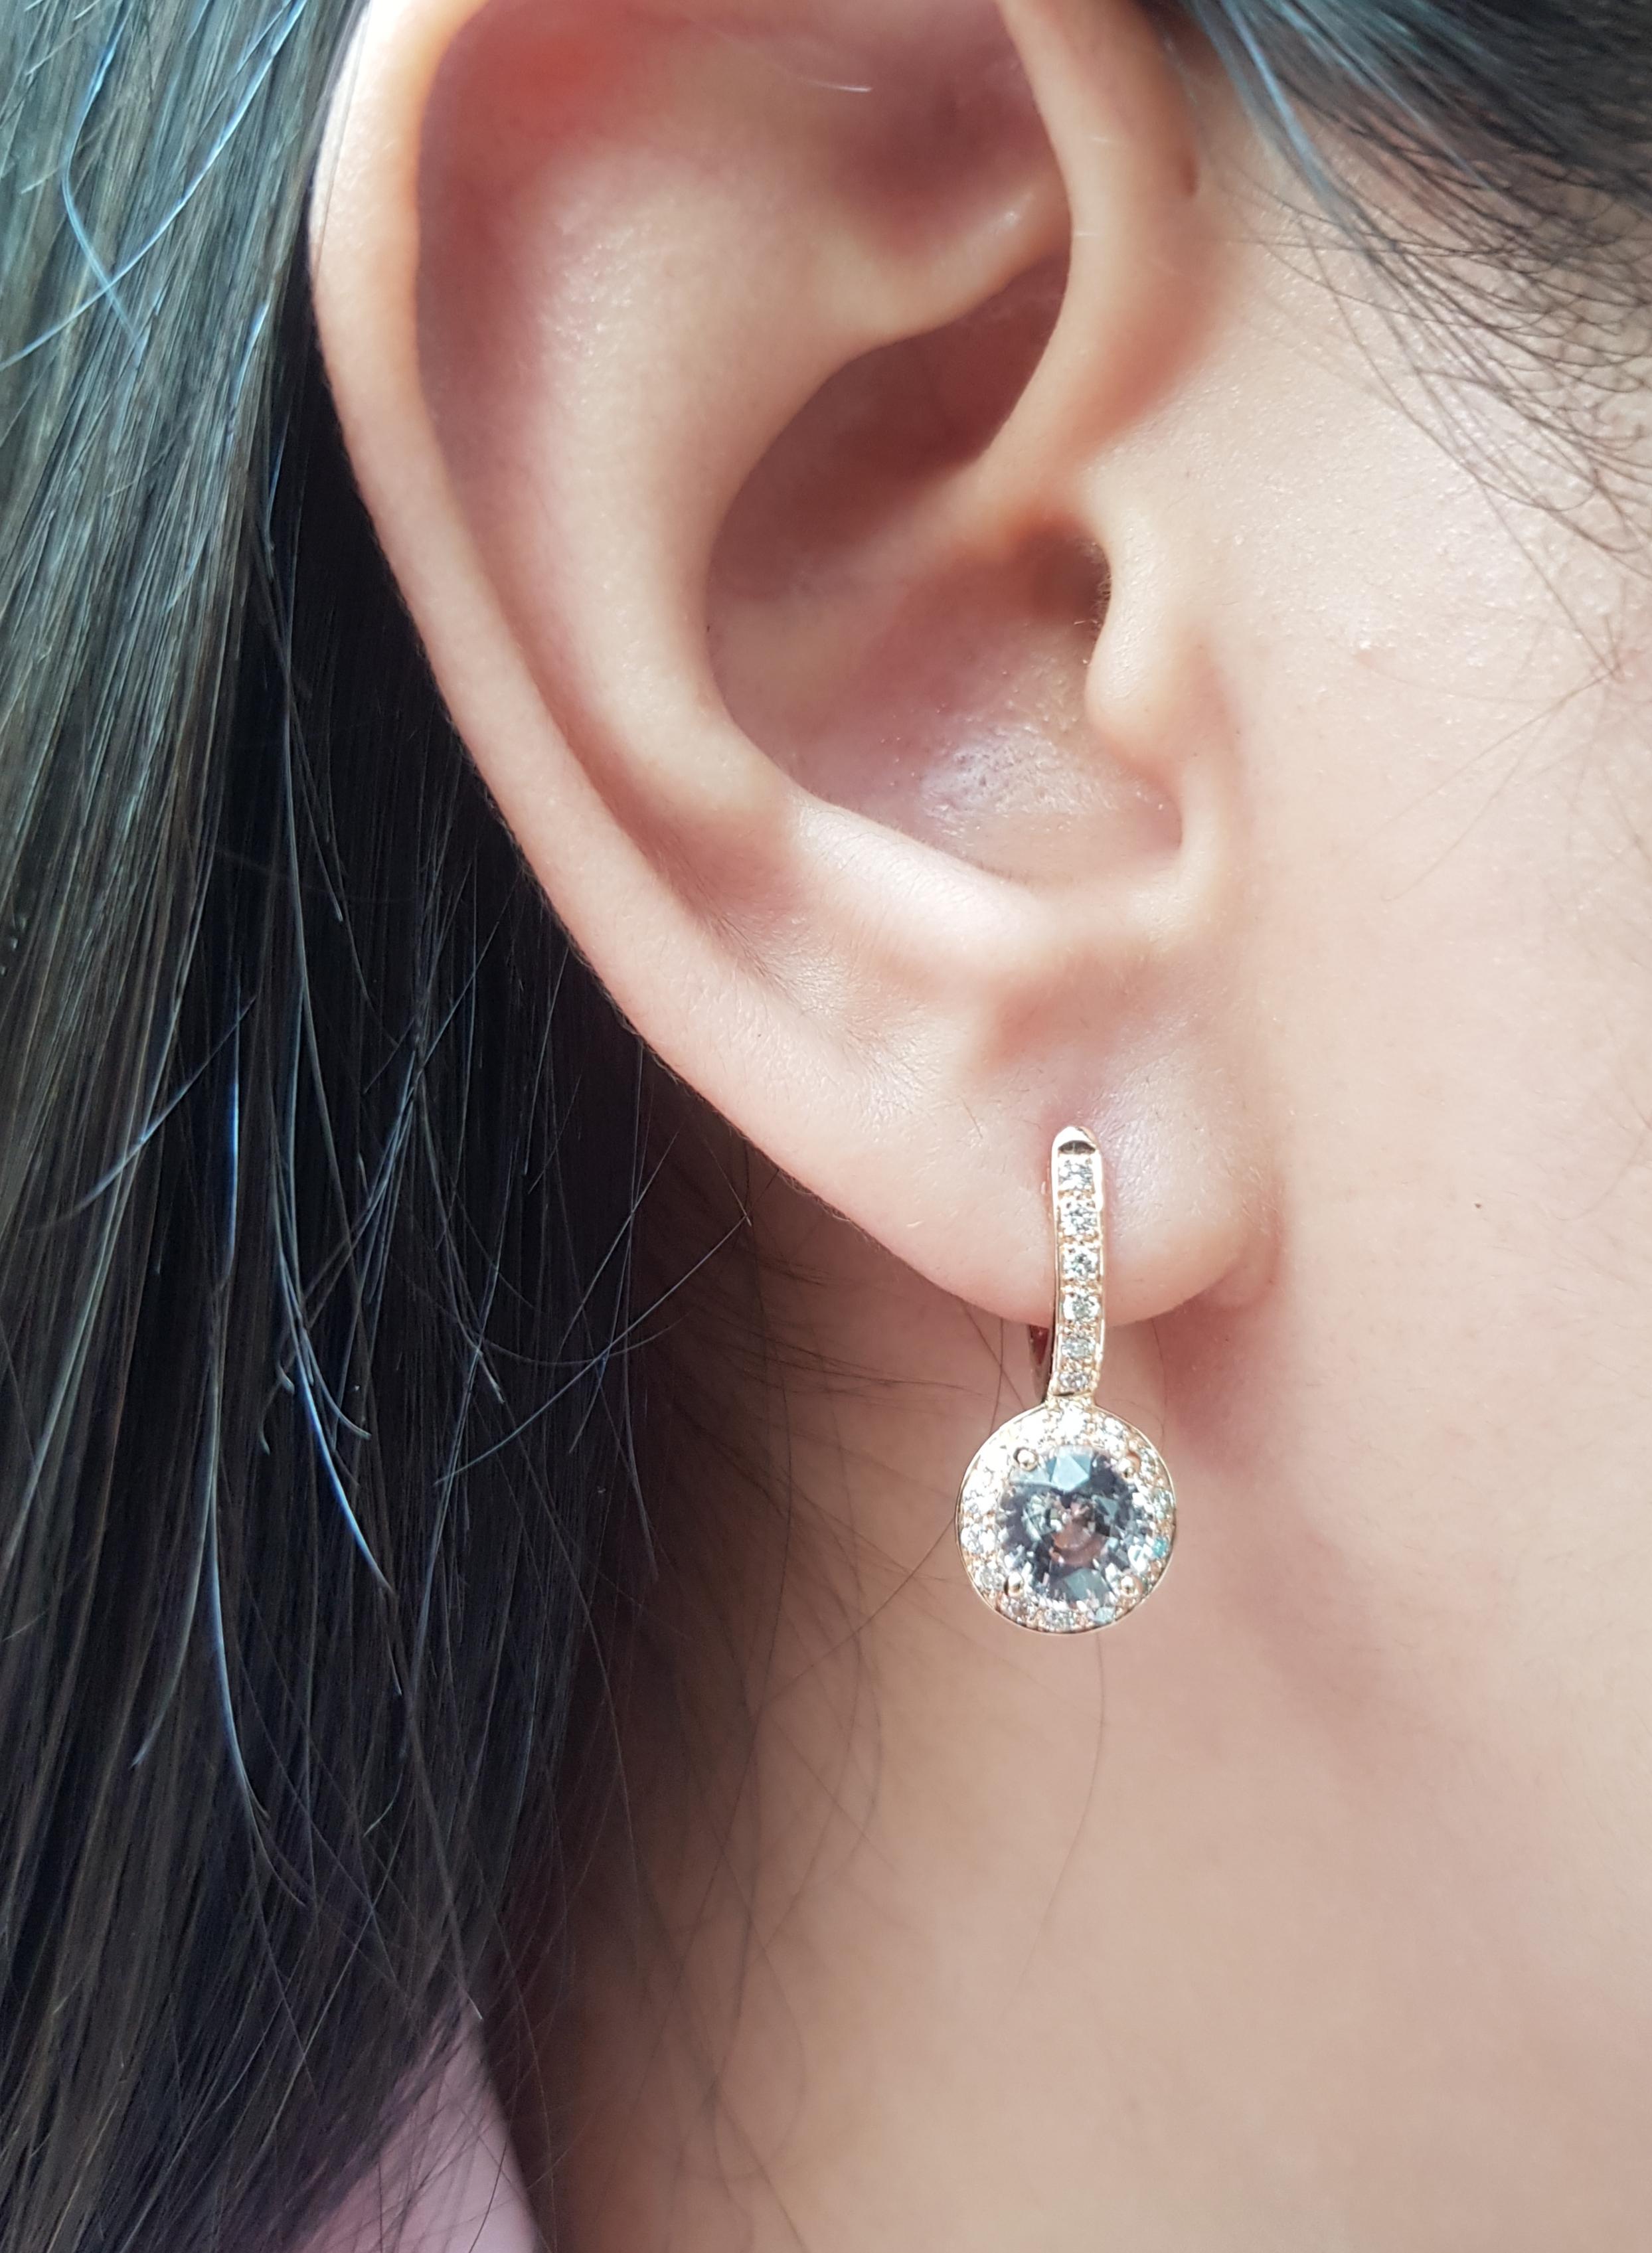 Pink Sapphire 2.82 carats  with Brown Diamond 0.43 carat Earrings set in 18 Karat Rose Gold Settings

Width: 0.9 cm
Length: 2.0 cm 

